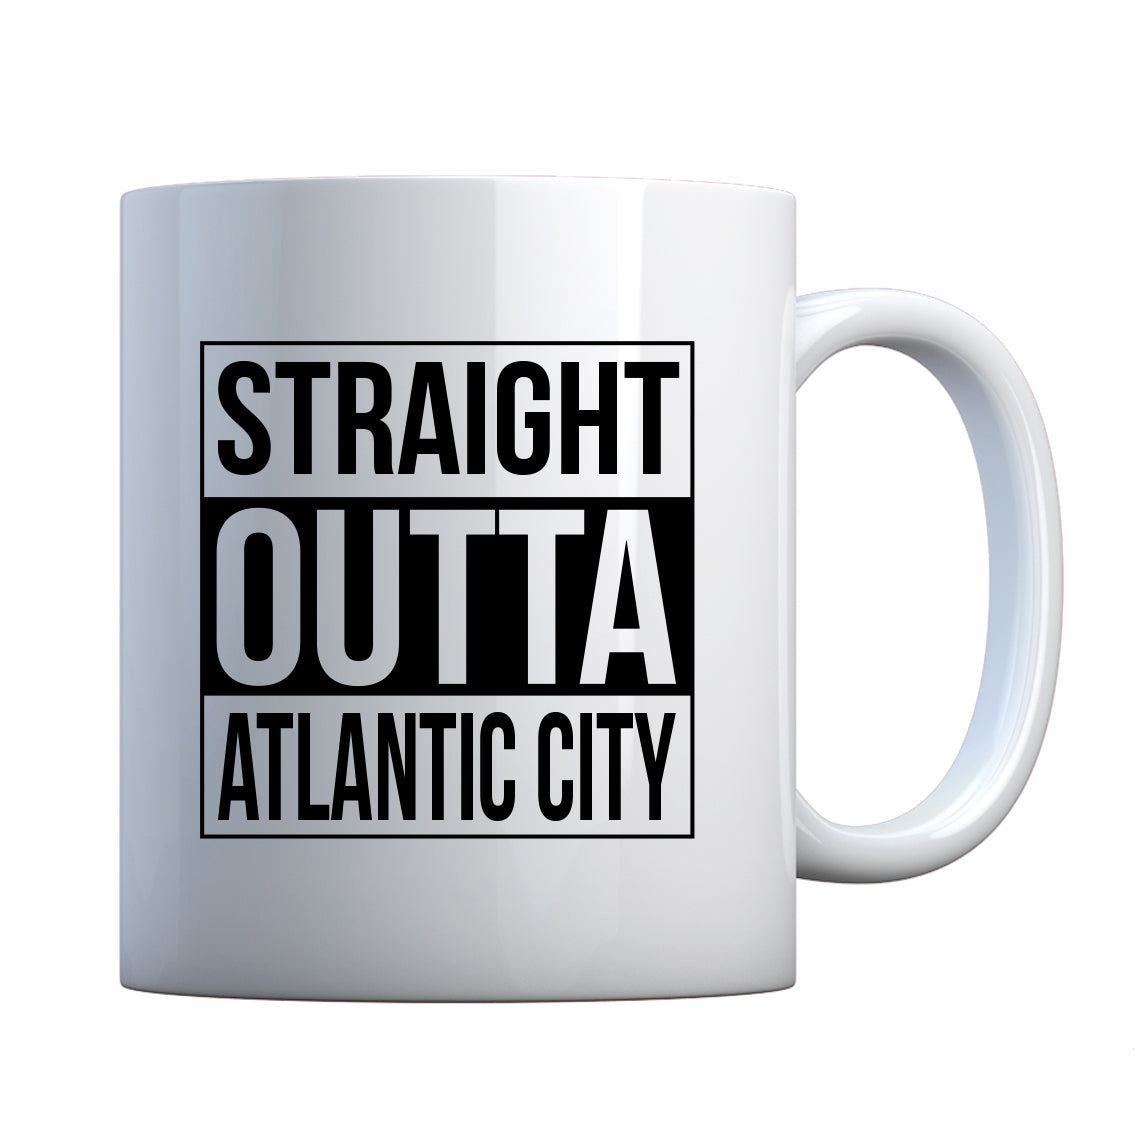 Straight Outta Atlantic City Ceramic Gift Mug